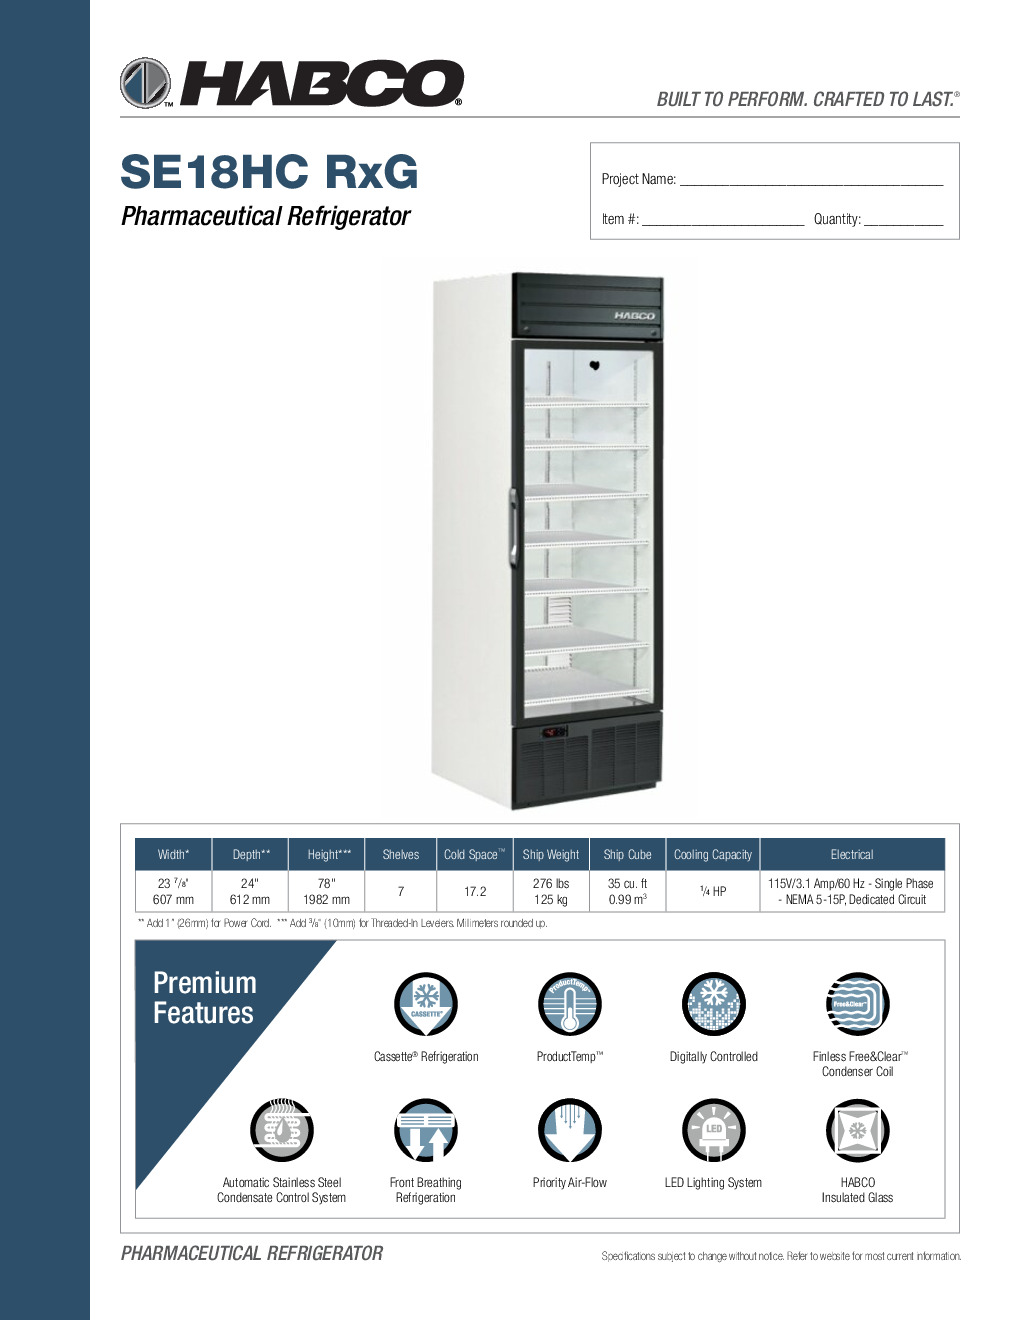 HABCO SE18HCRXG Medical Refrigerator